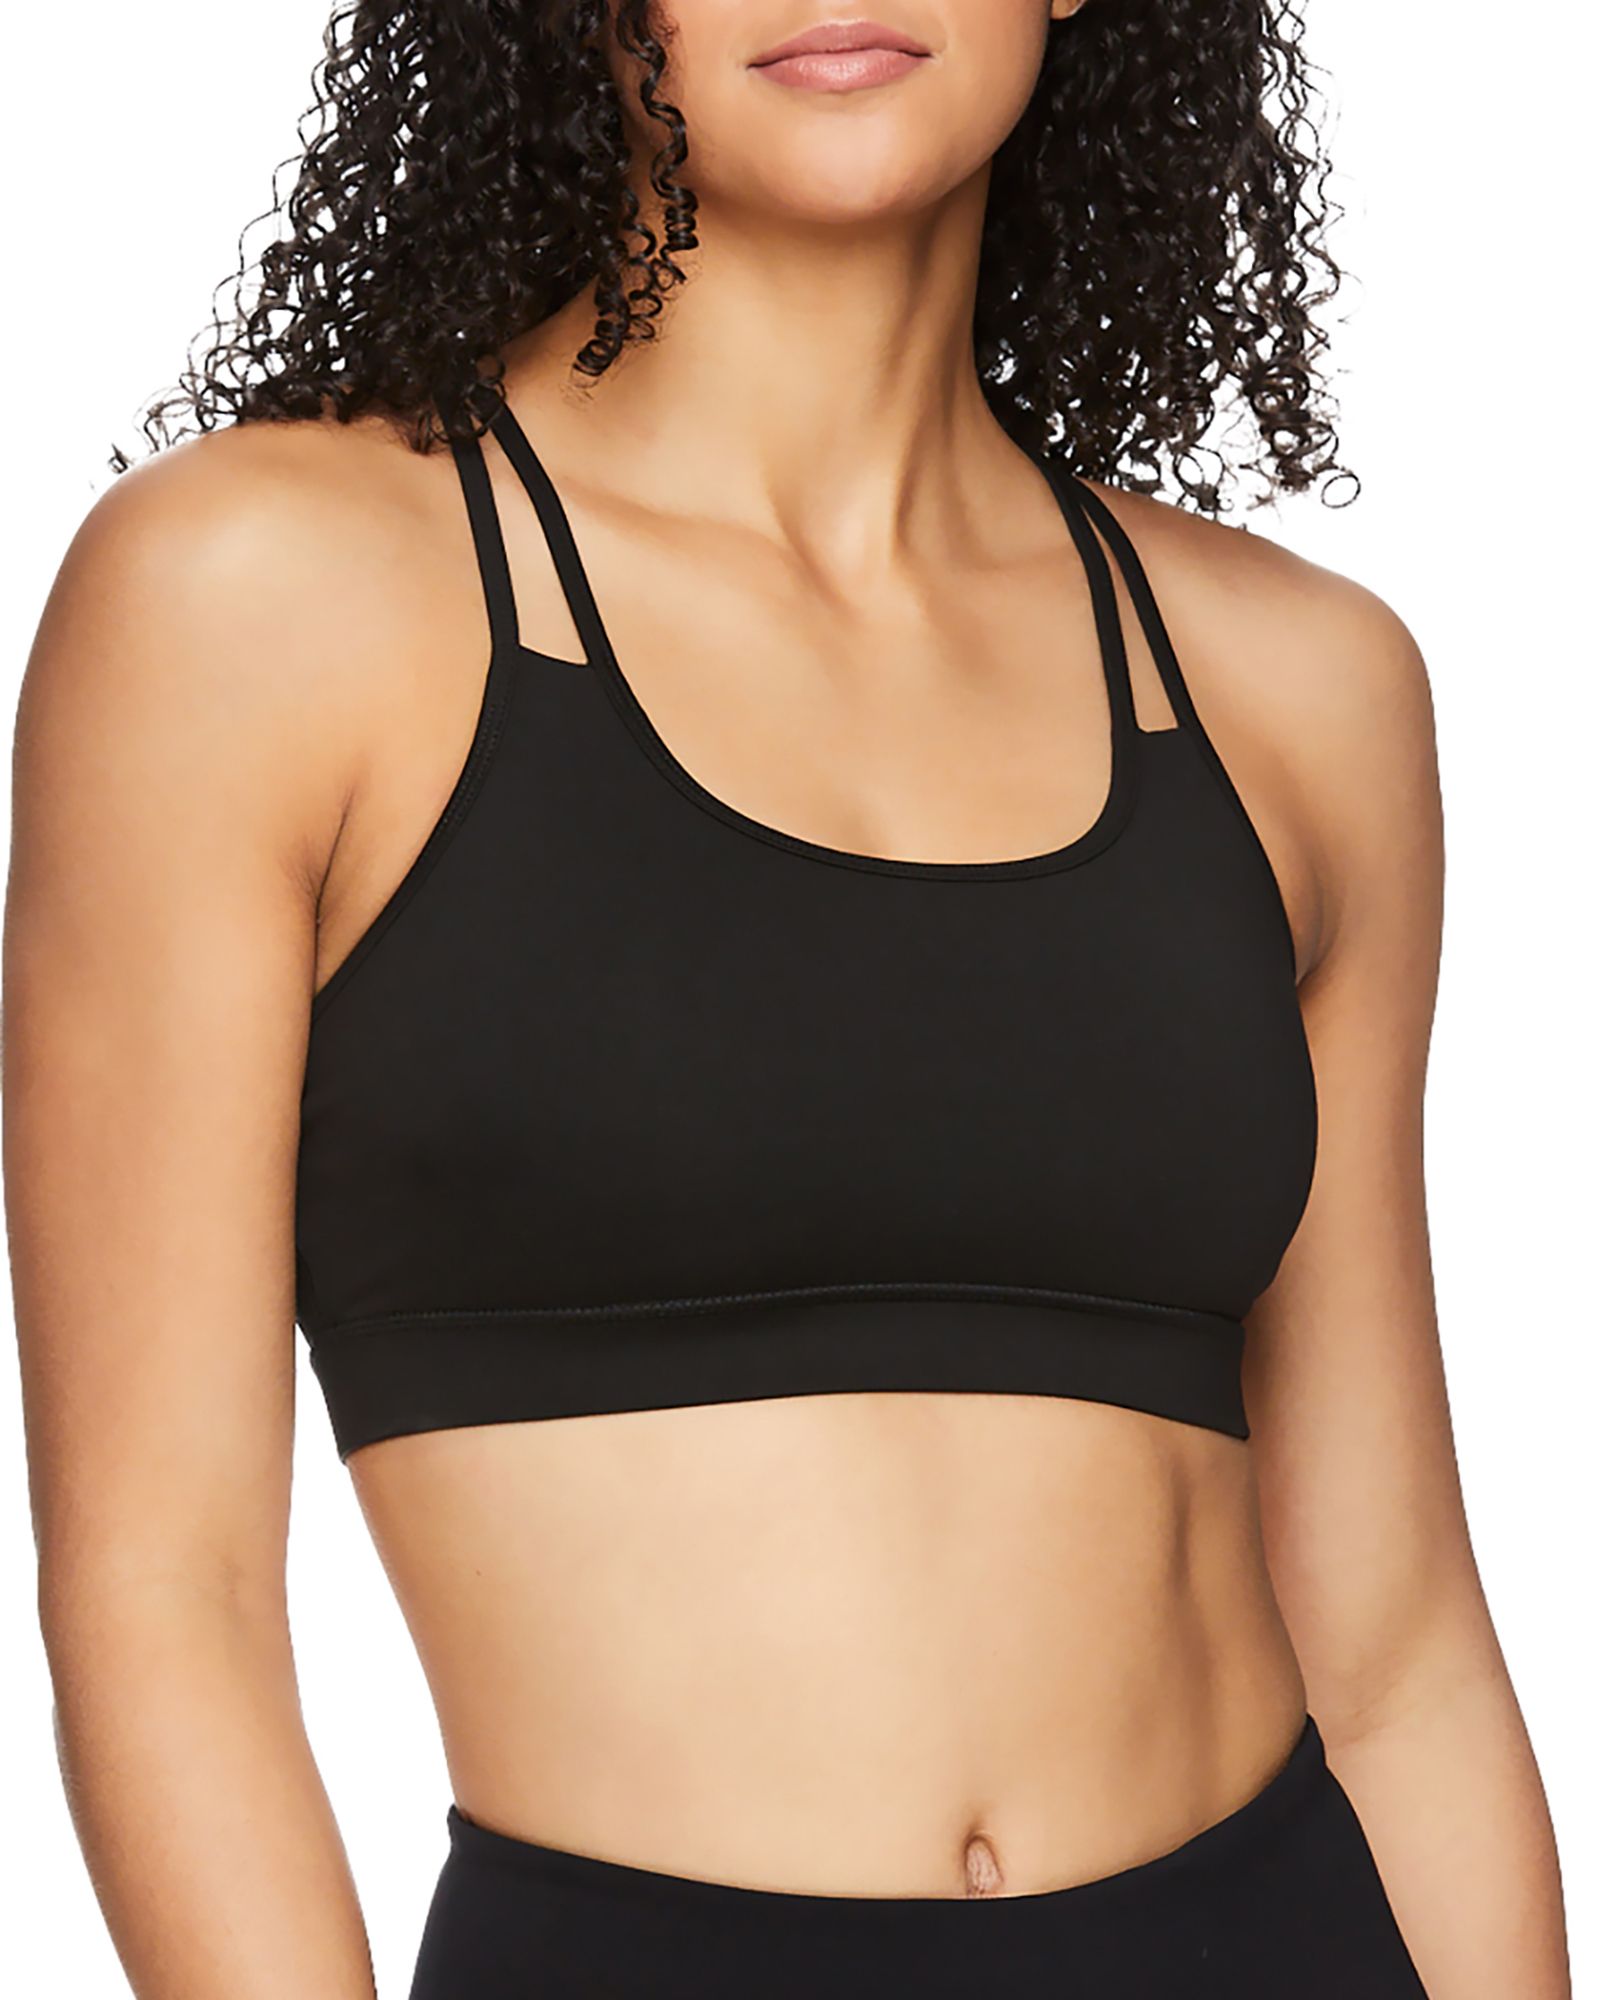 NWT Women's Gaiam Medium Support Sports Bra Size S in Black MSRP $30